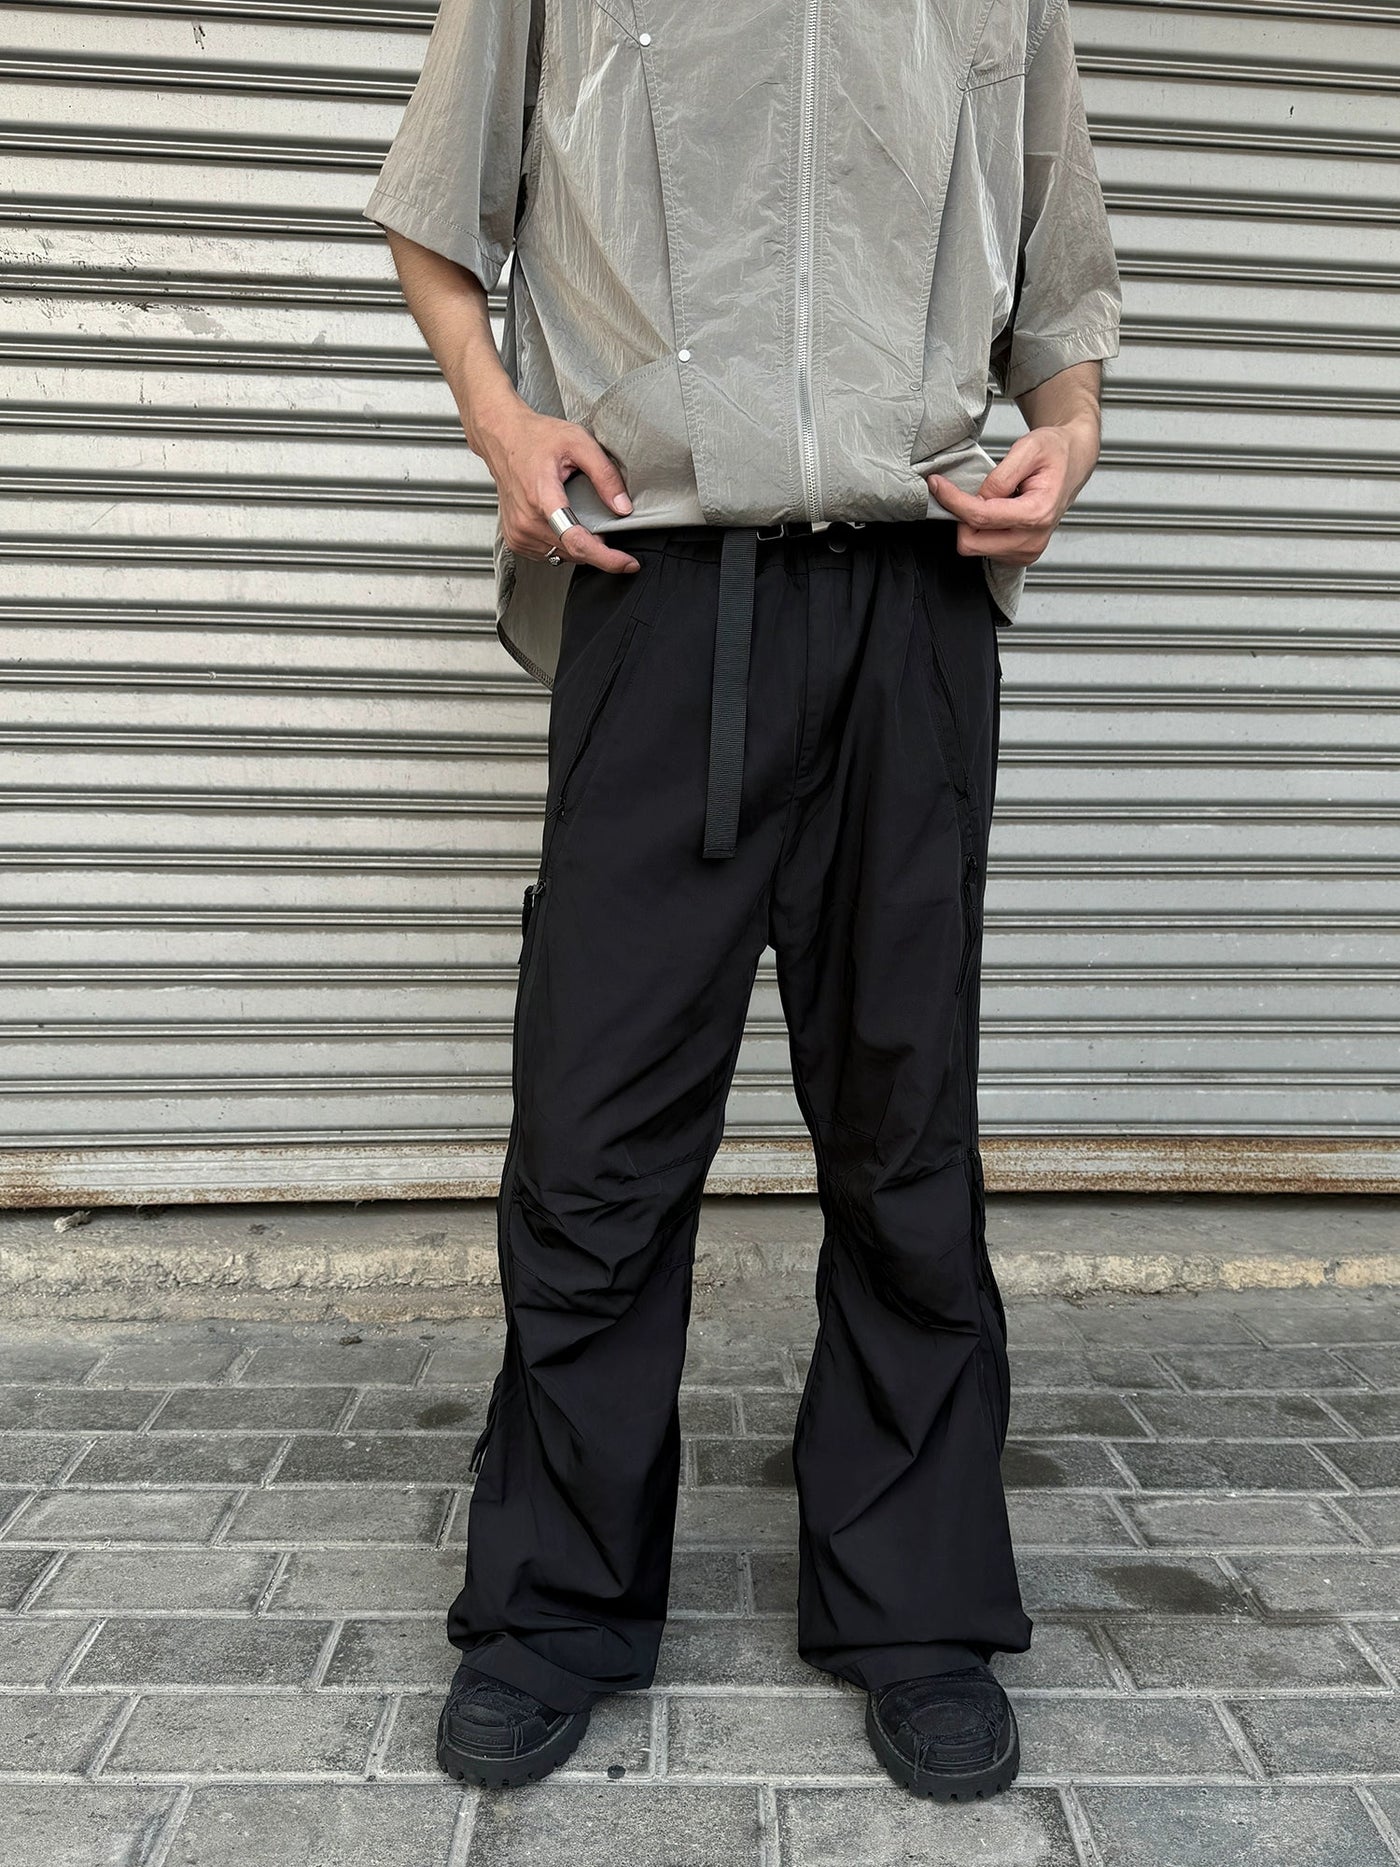 Functional Side Zipper Parachute Pants Korean Street Fashion Pants By Ash Dark Shop Online at OH Vault